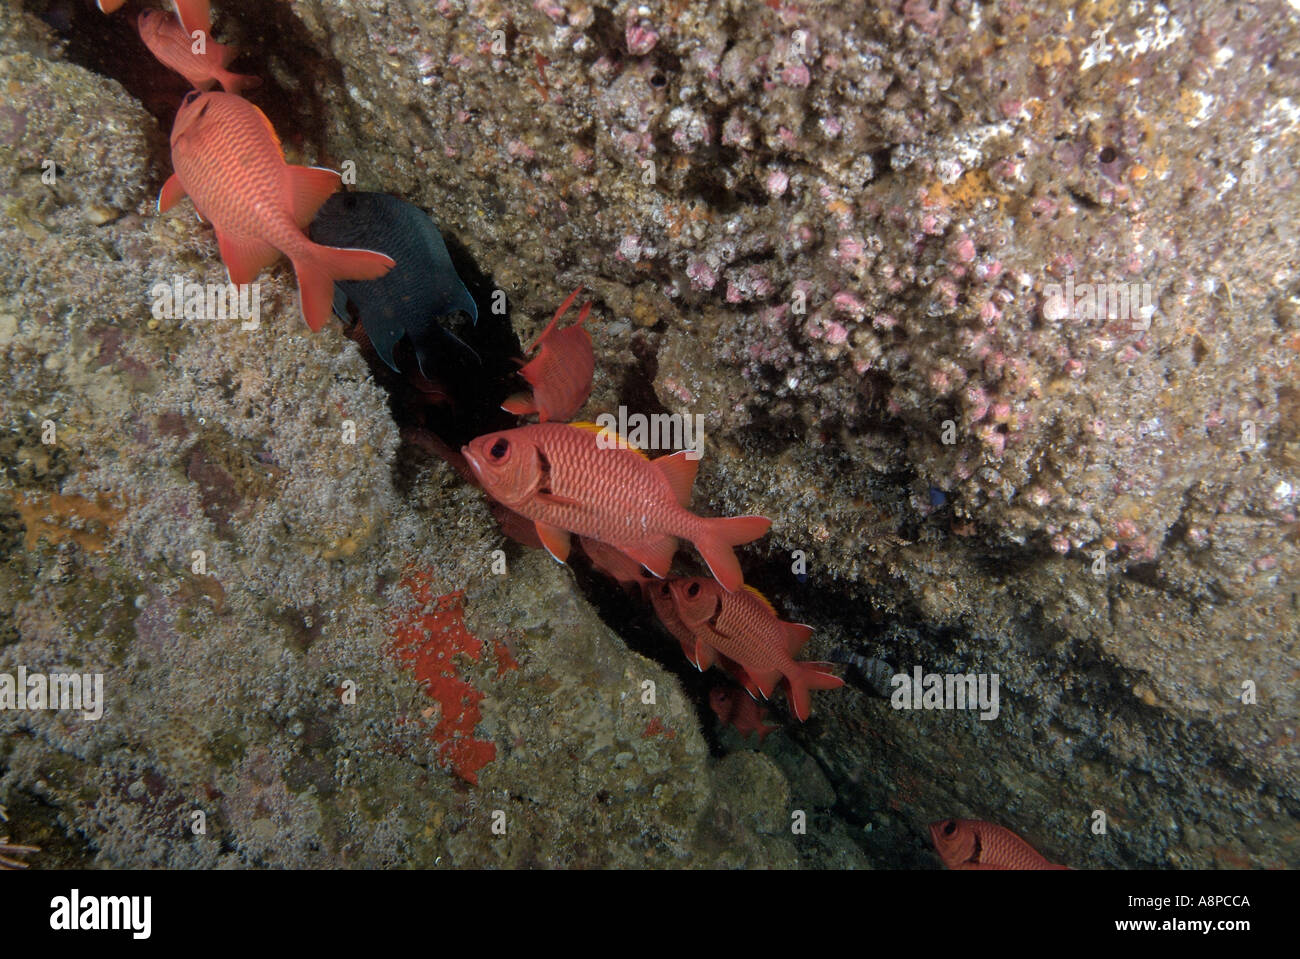 School of blackbar soldierfish off Costa Rica, Catalina Islands Stock Photo